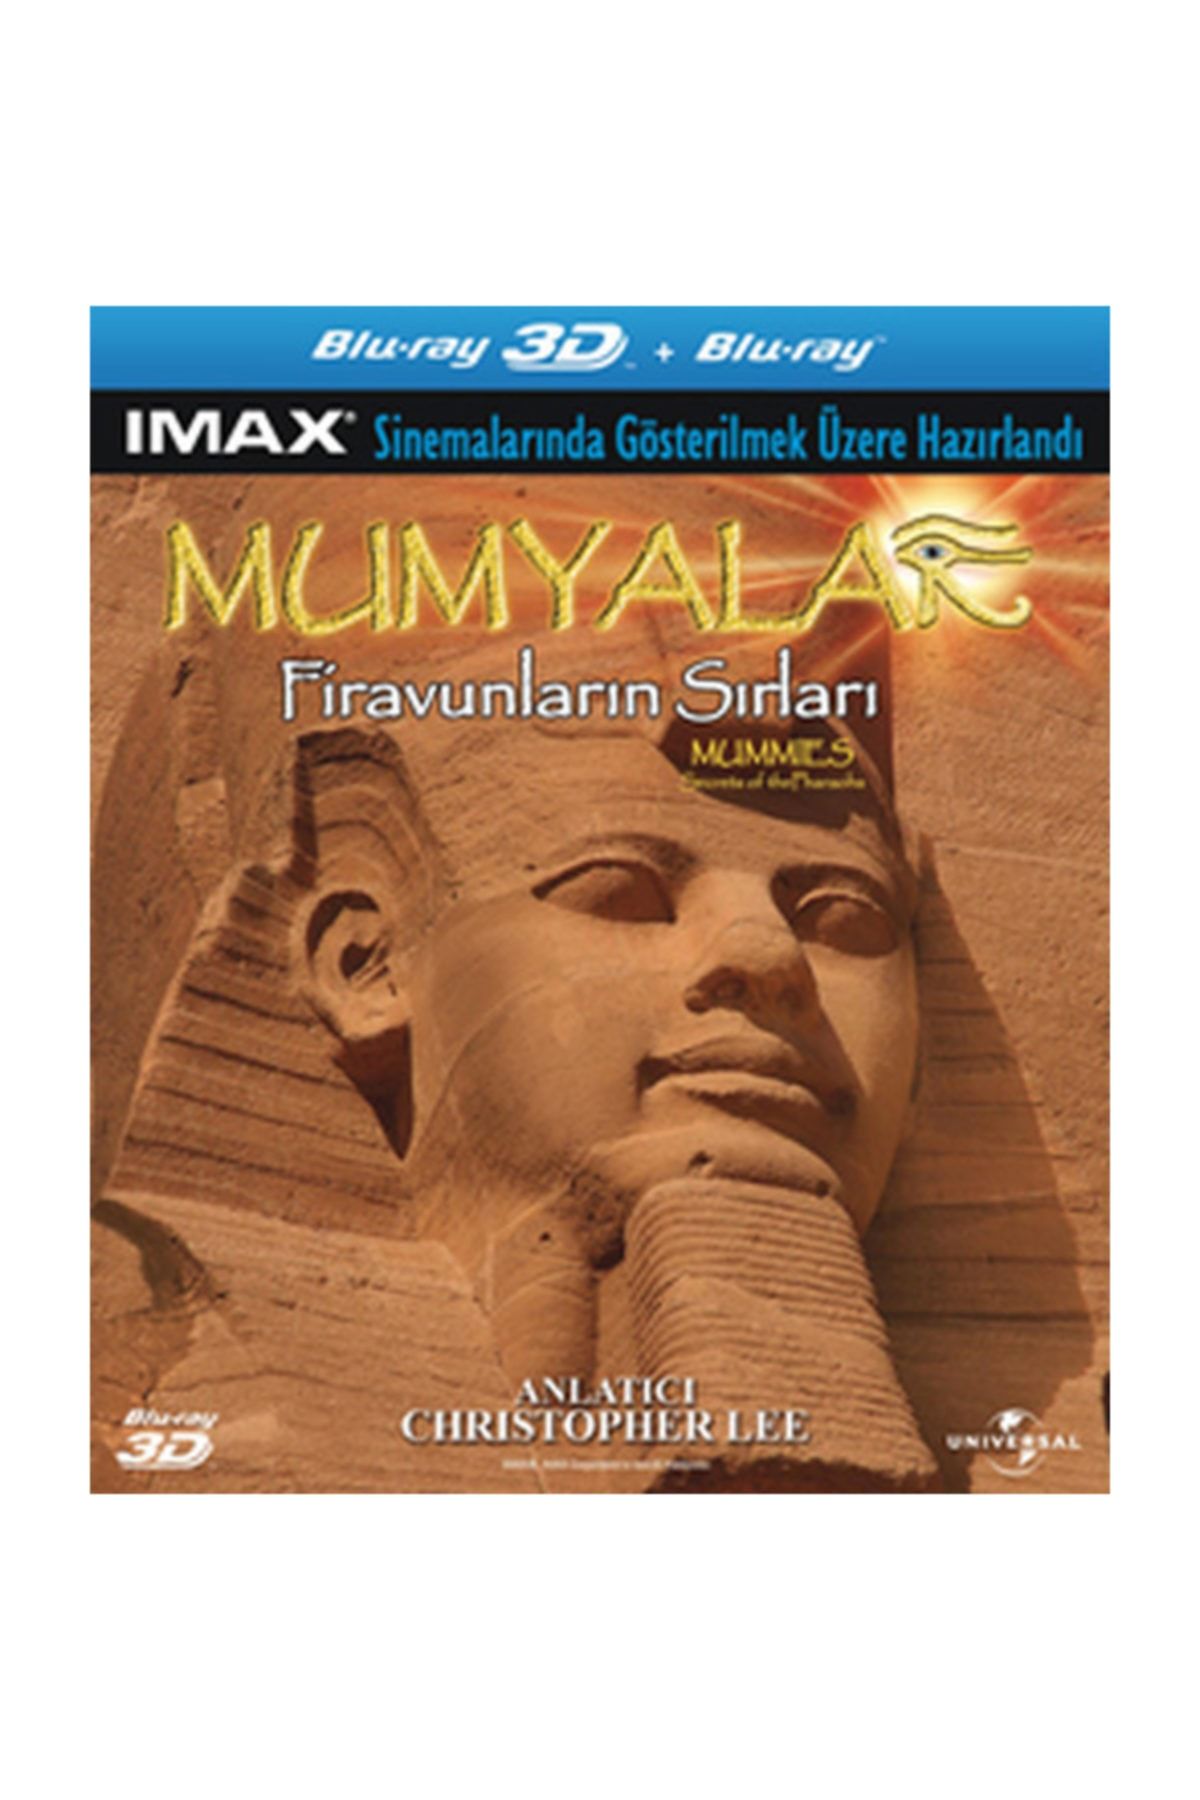 plakmarketi 3d Blu Ray - Mummies Secrets Of The Pharaohs (3d) - Mumya: Firavunların Sırları (3 Boyutlu)